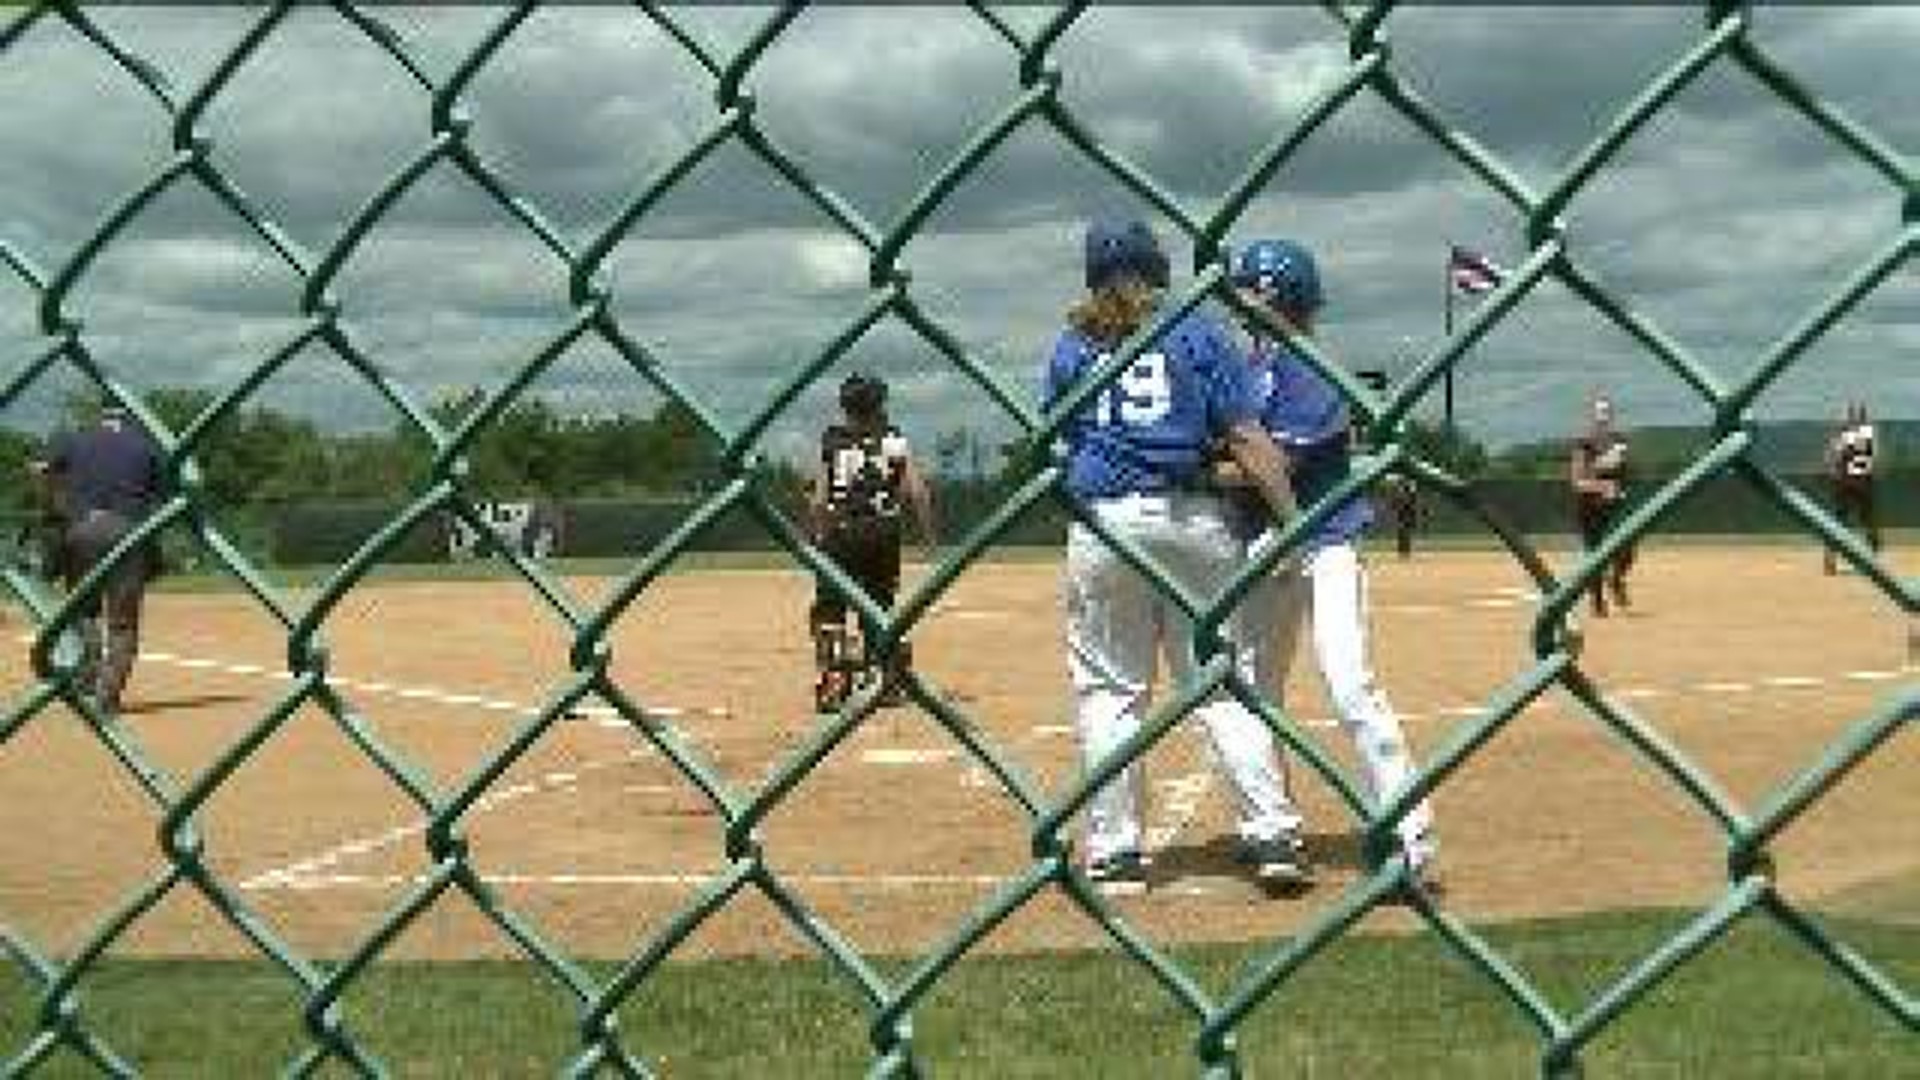 Minersville softball